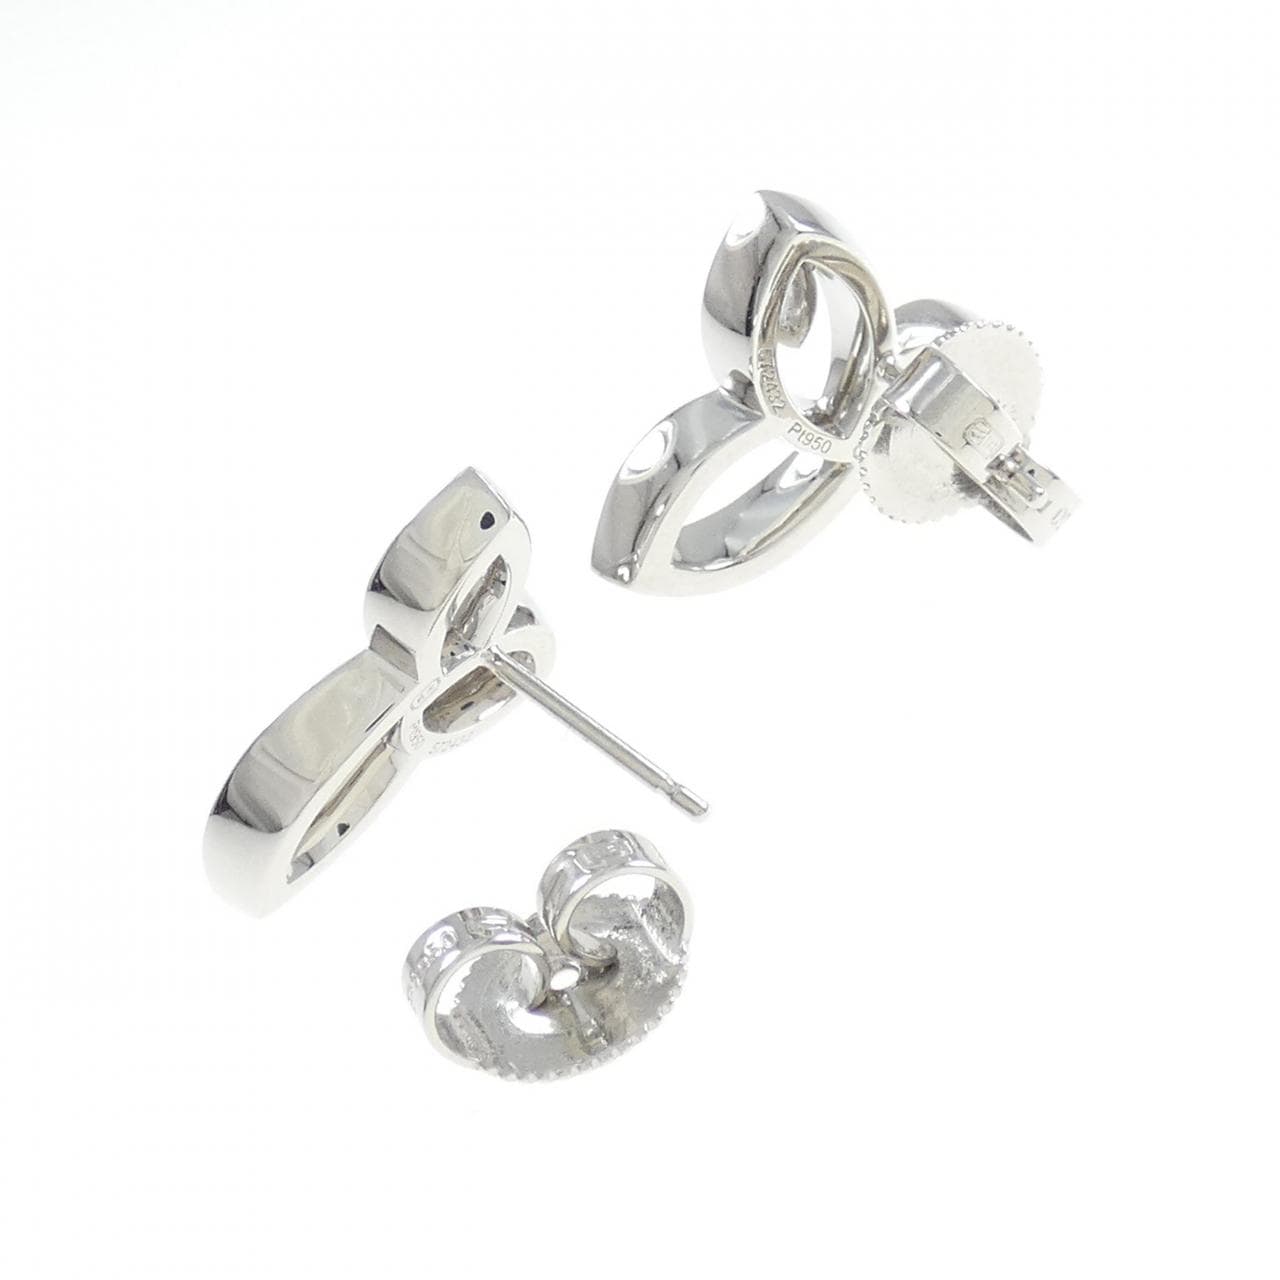 HARRY WINSTON Lily cluster earrings